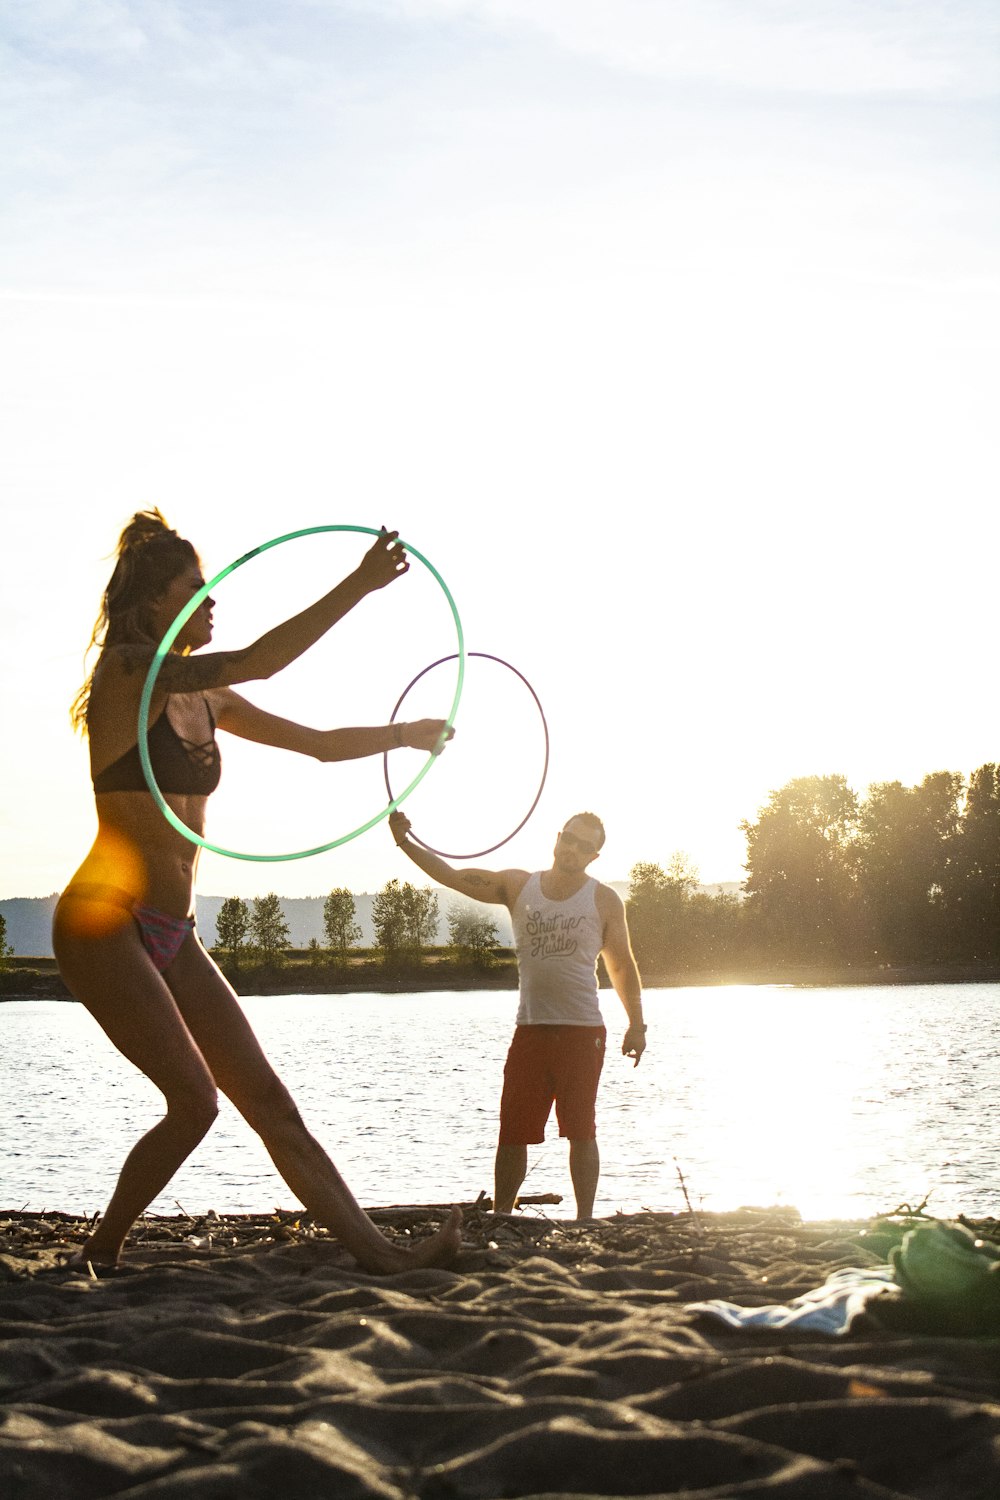 man and woman playing hula hoop near body of water